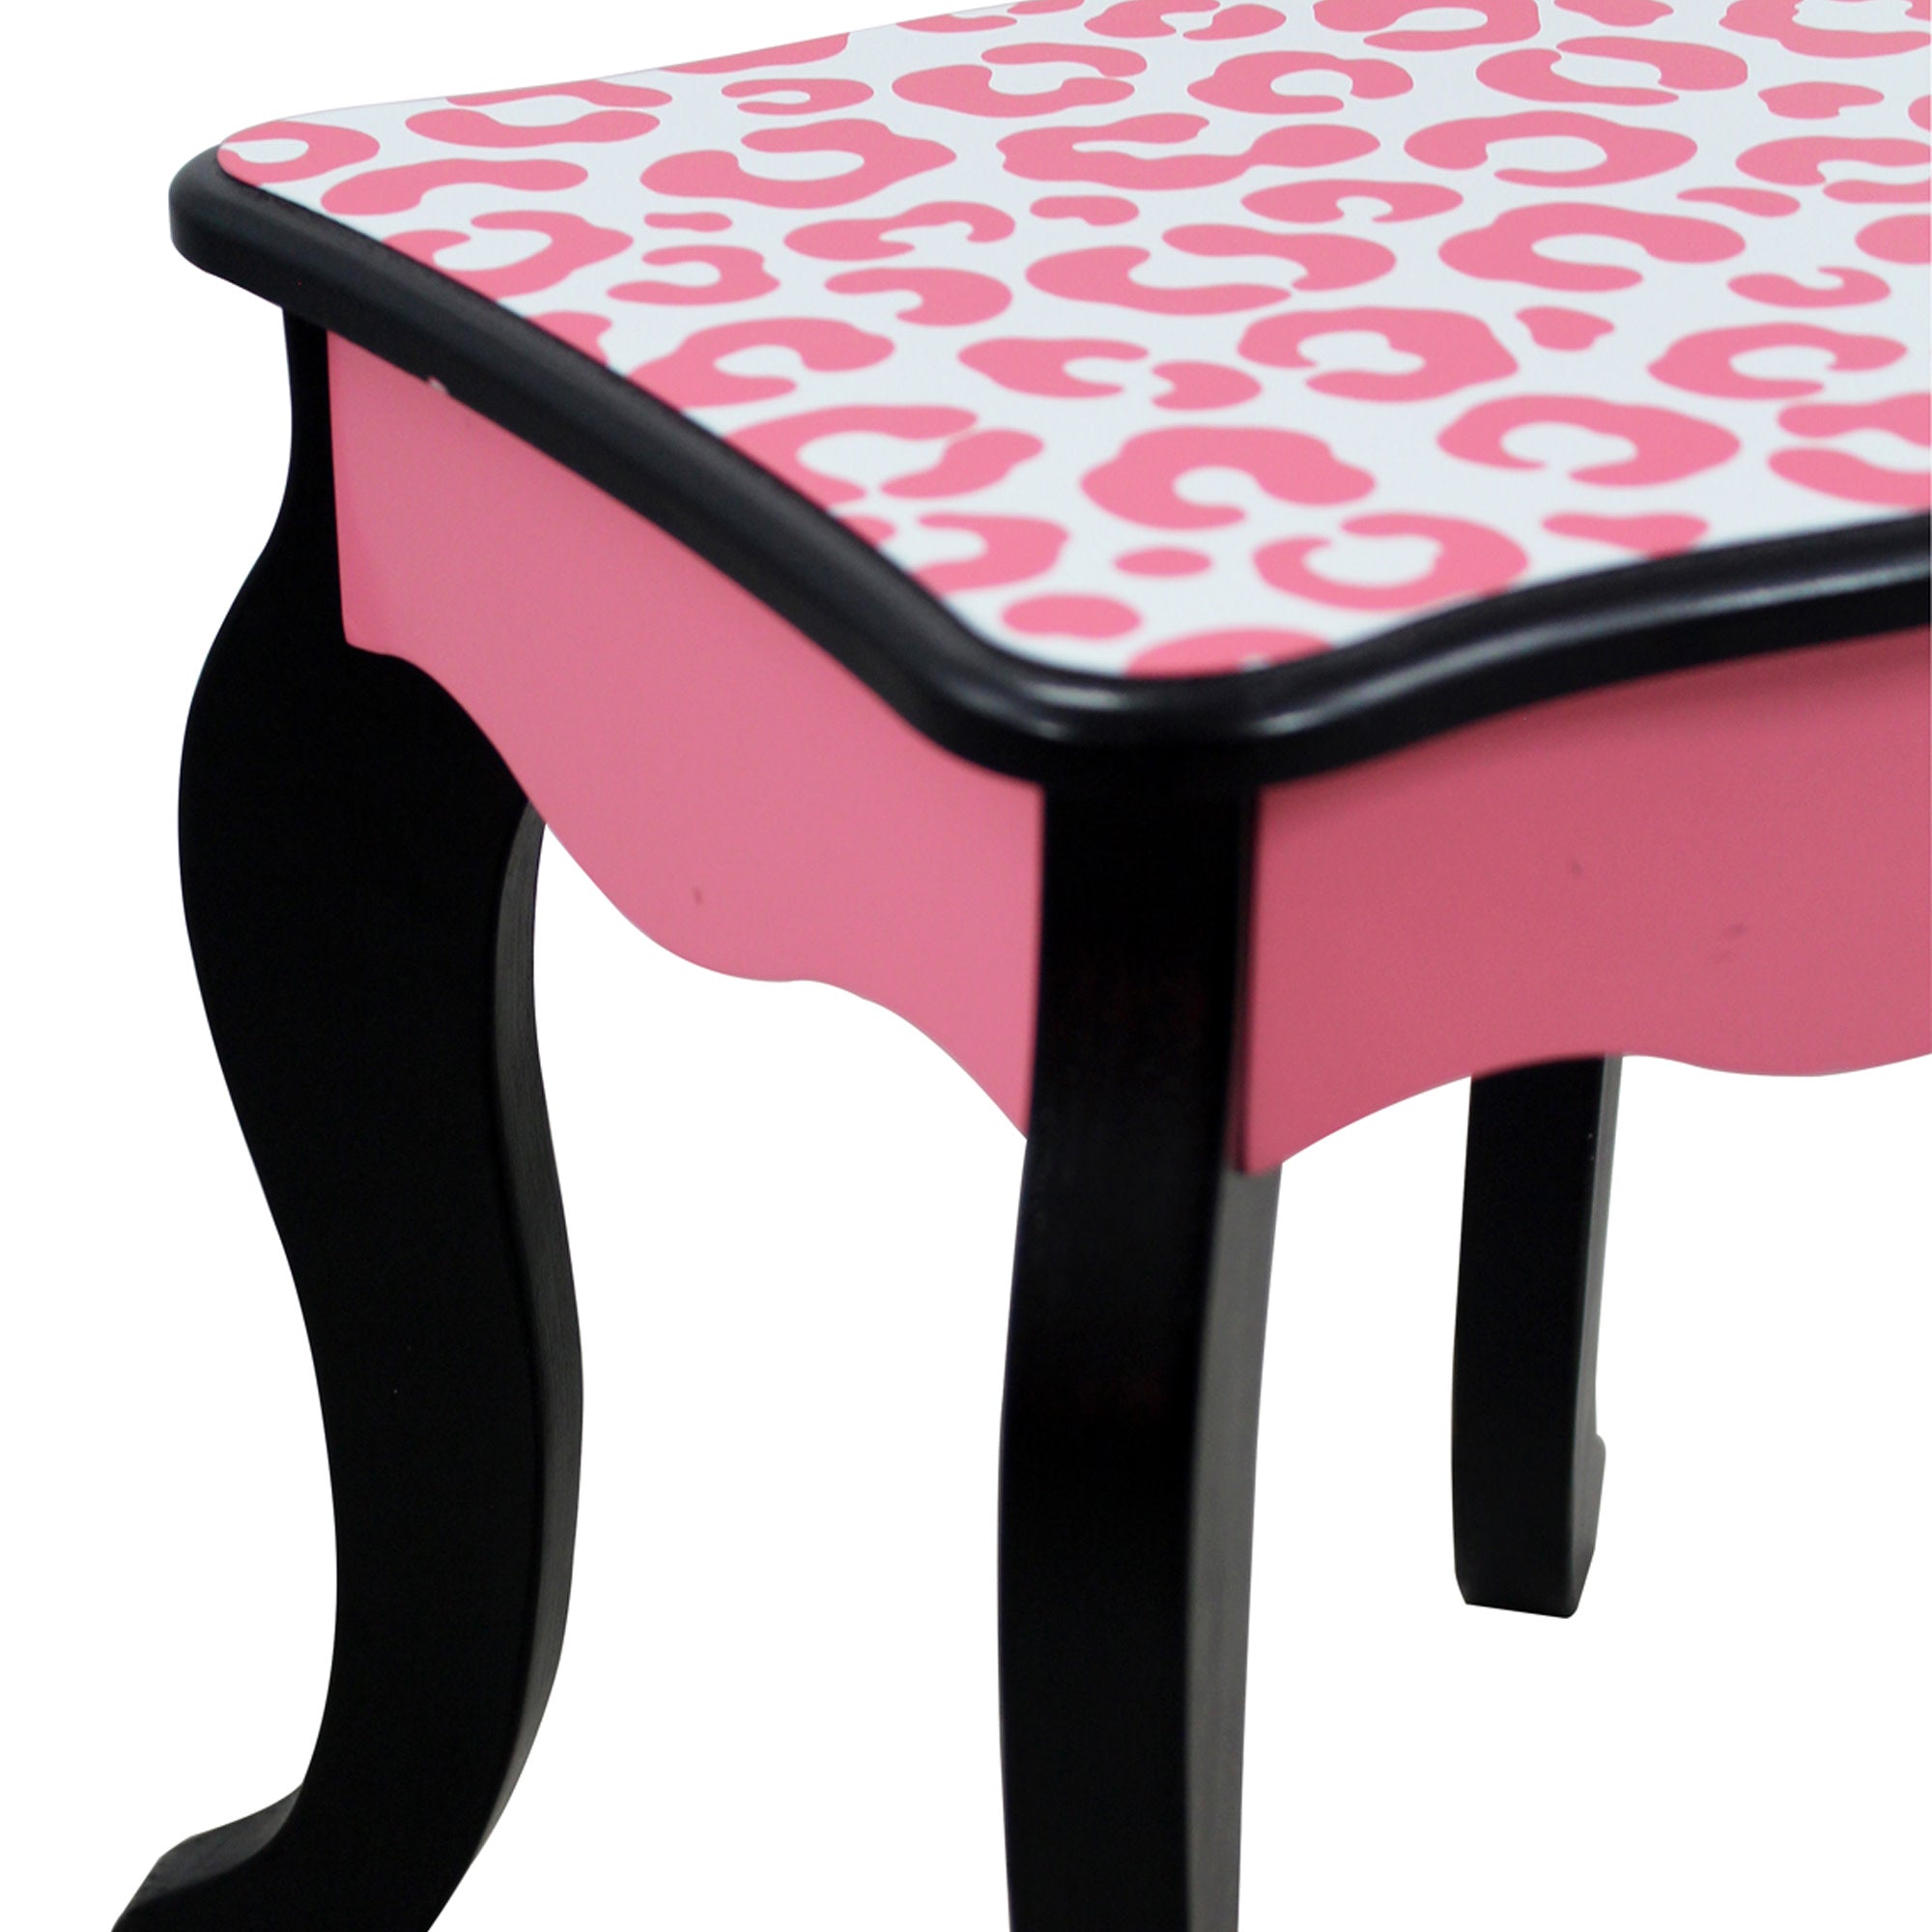 Fantasy Fields Gisele Leopard Print Vanity Playset, Pink / Black